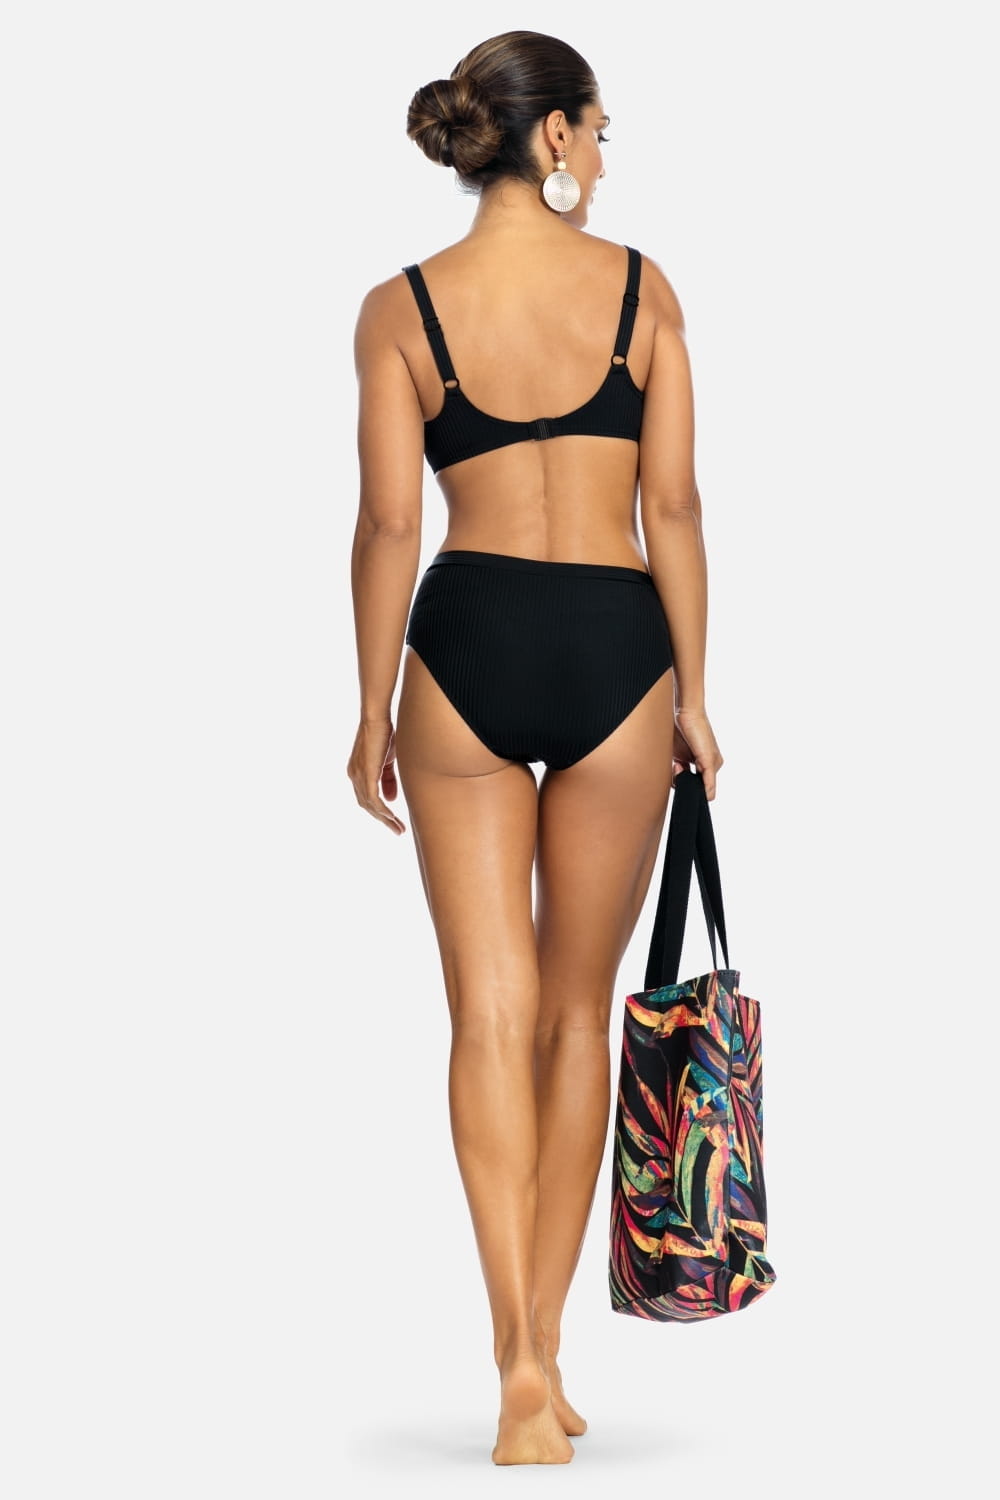 Axami Luxury Swimwear FG04E Underwire Bikini Top Black